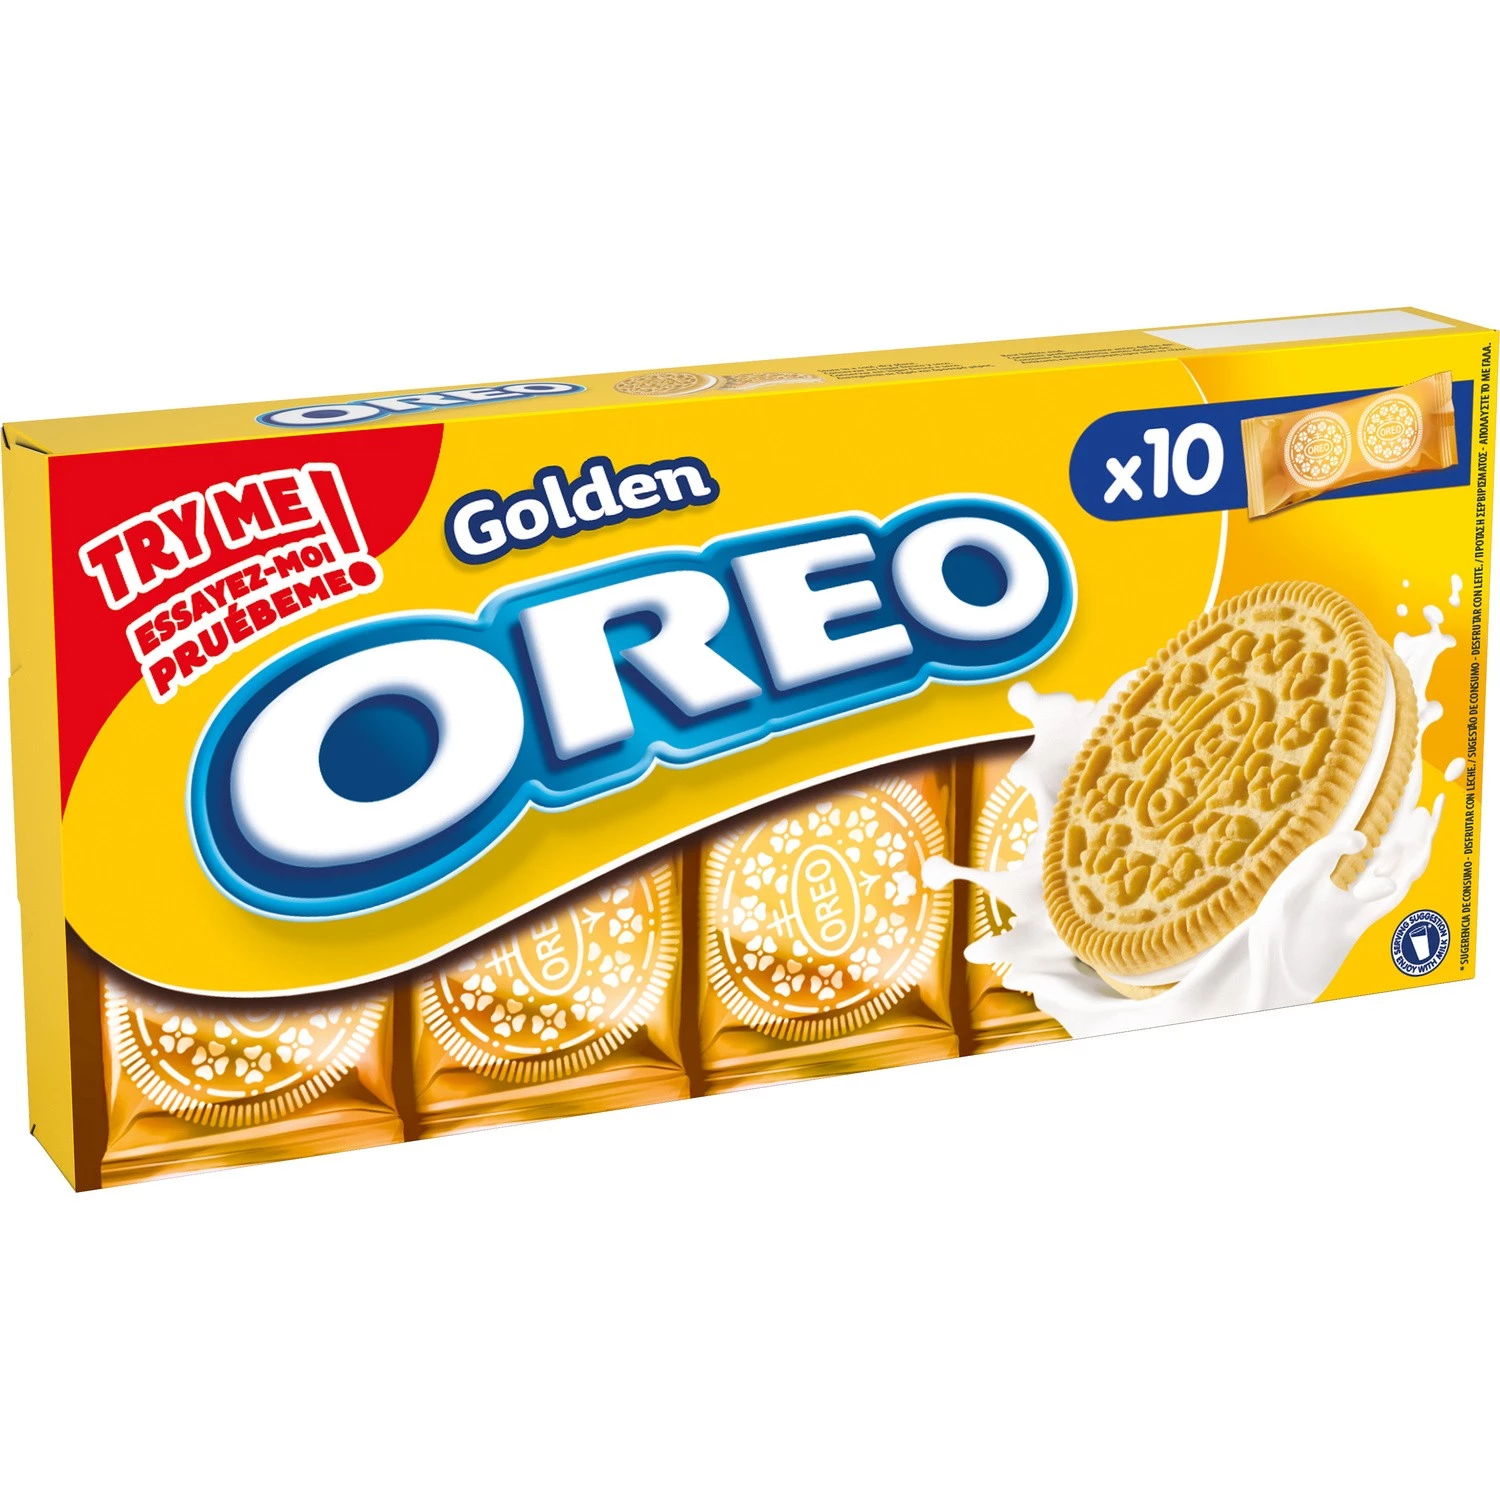 Golden vanilla filled biscuits 220g - OREO